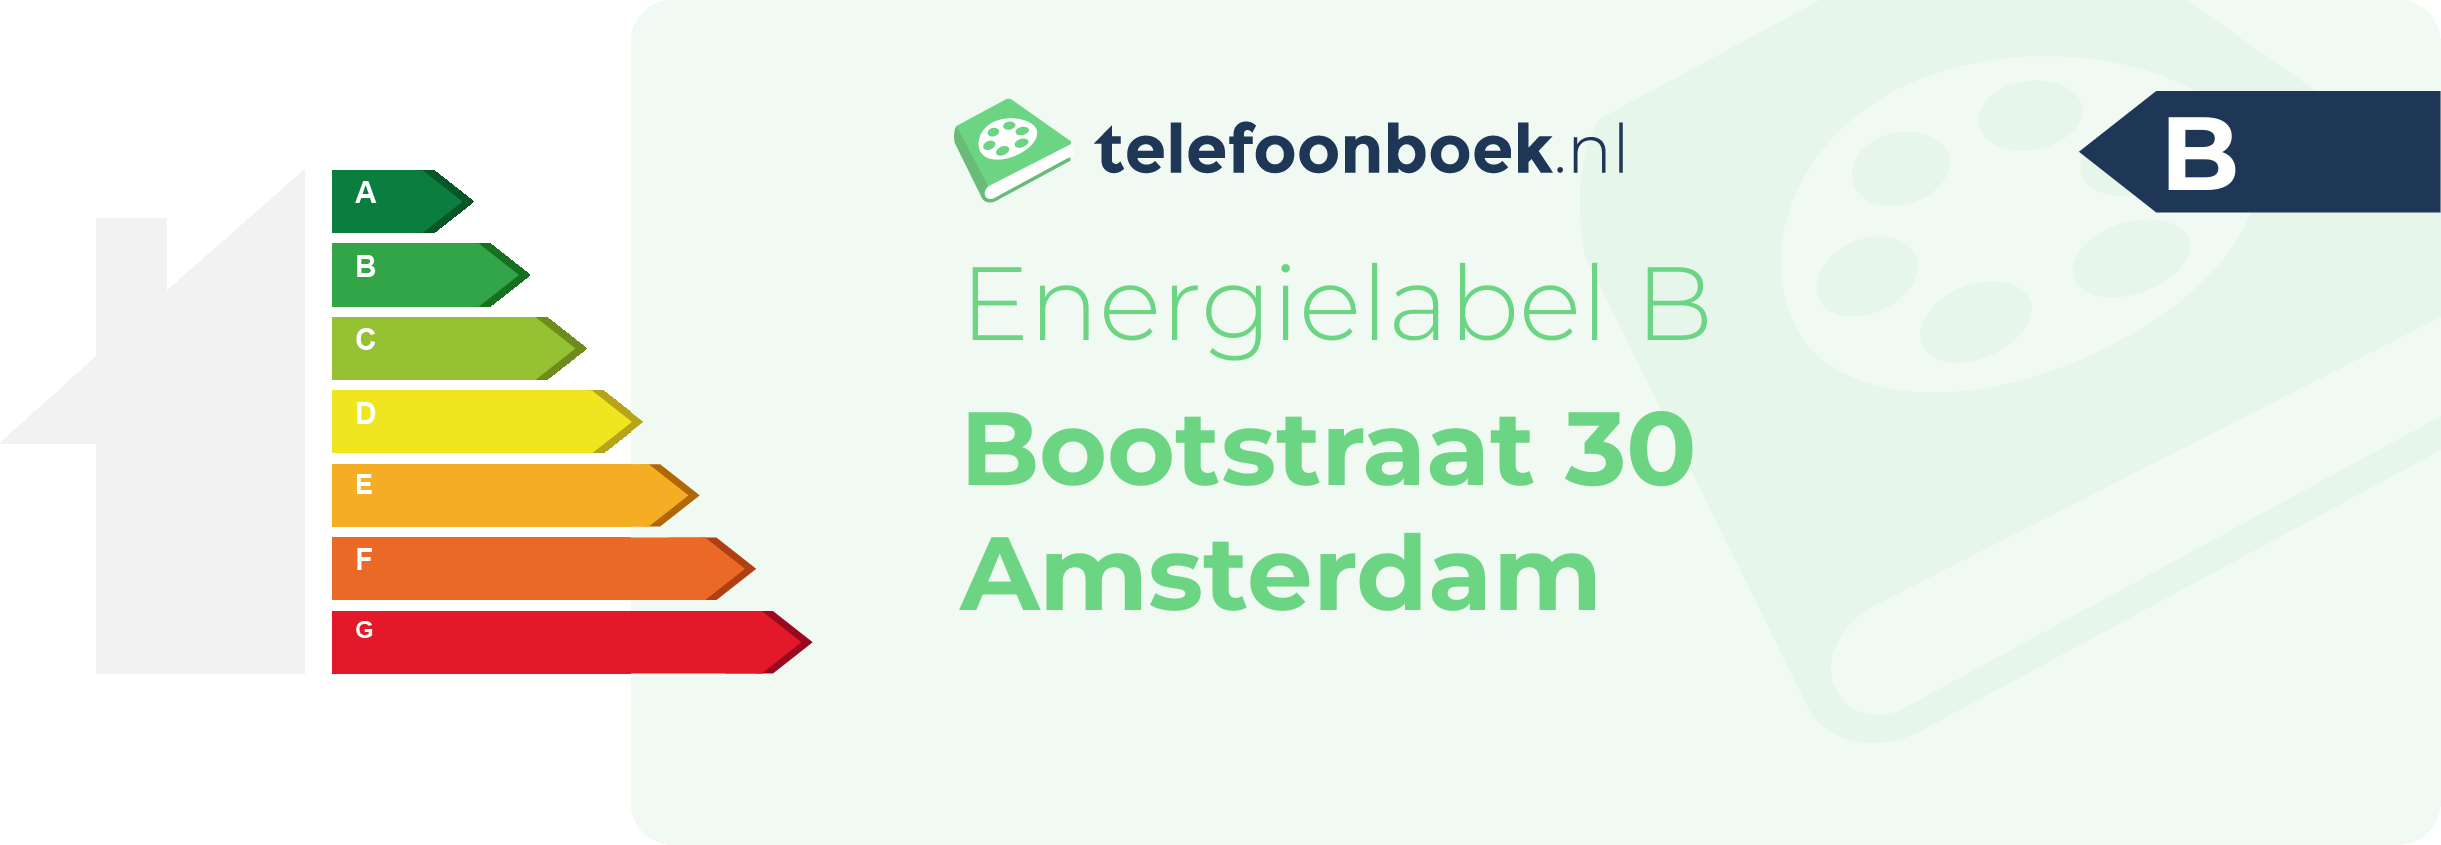 Energielabel Bootstraat 30 Amsterdam